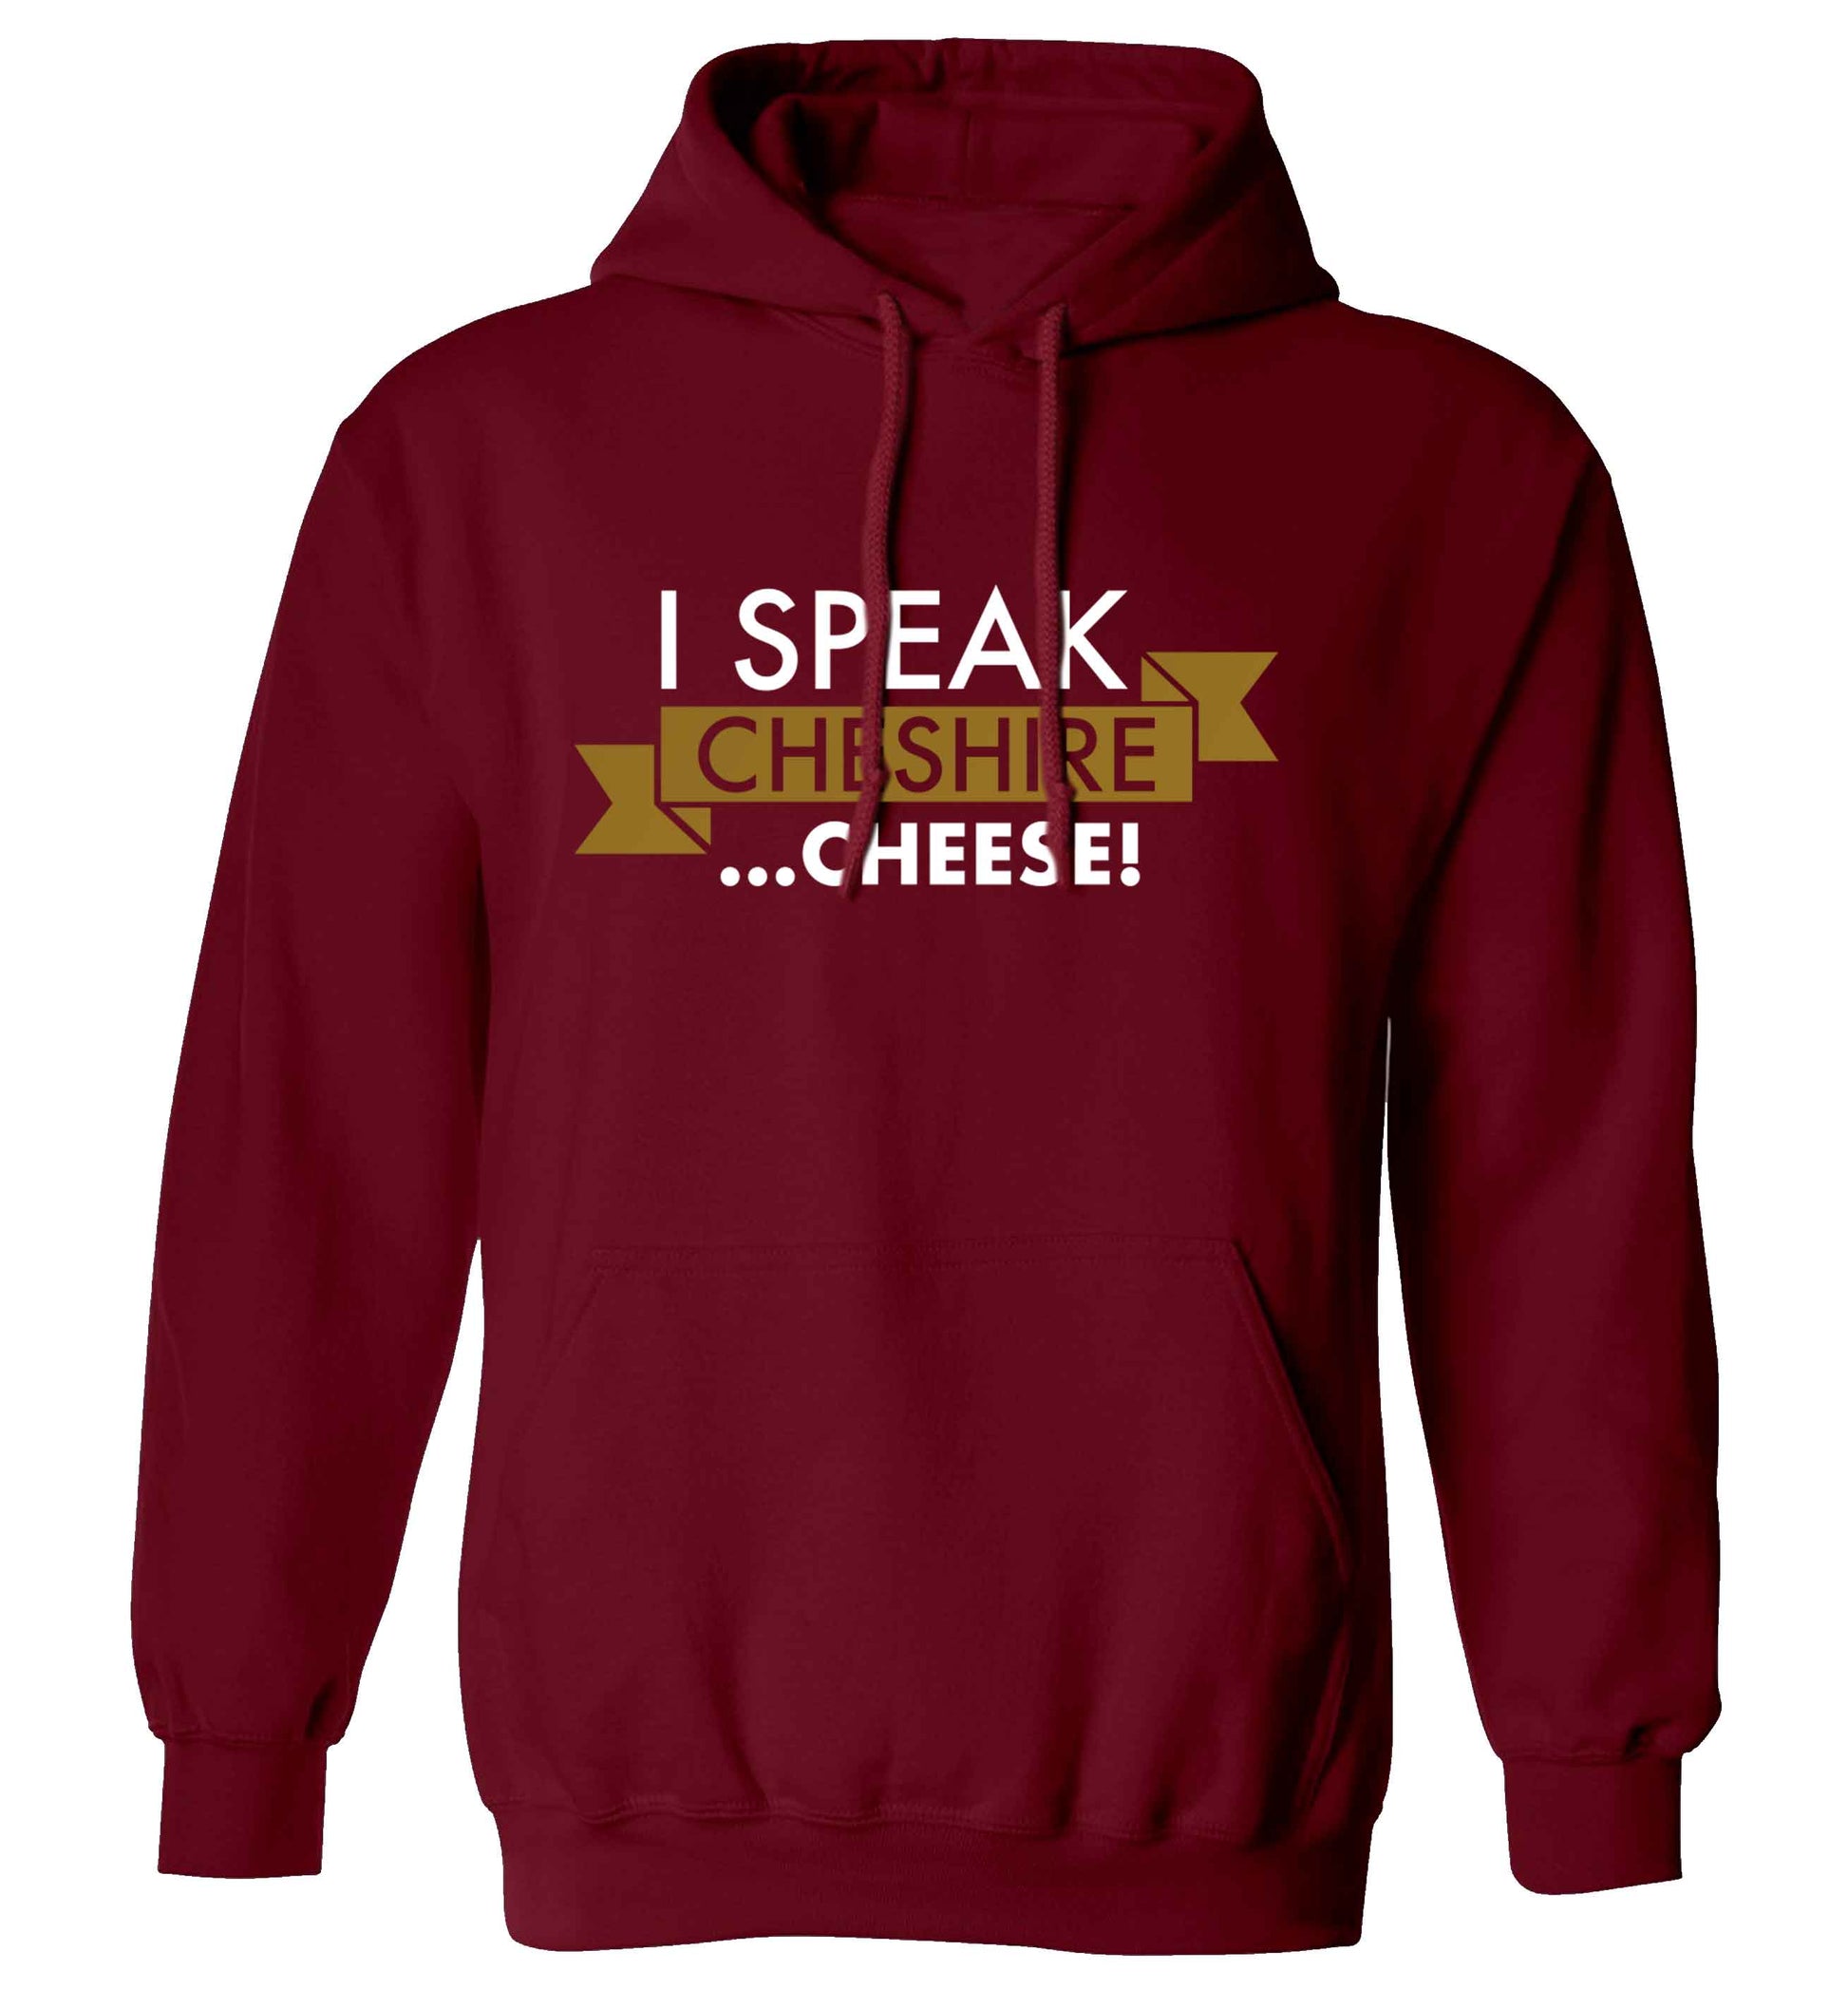 I speak Cheshire cheese adults unisex maroon hoodie 2XL